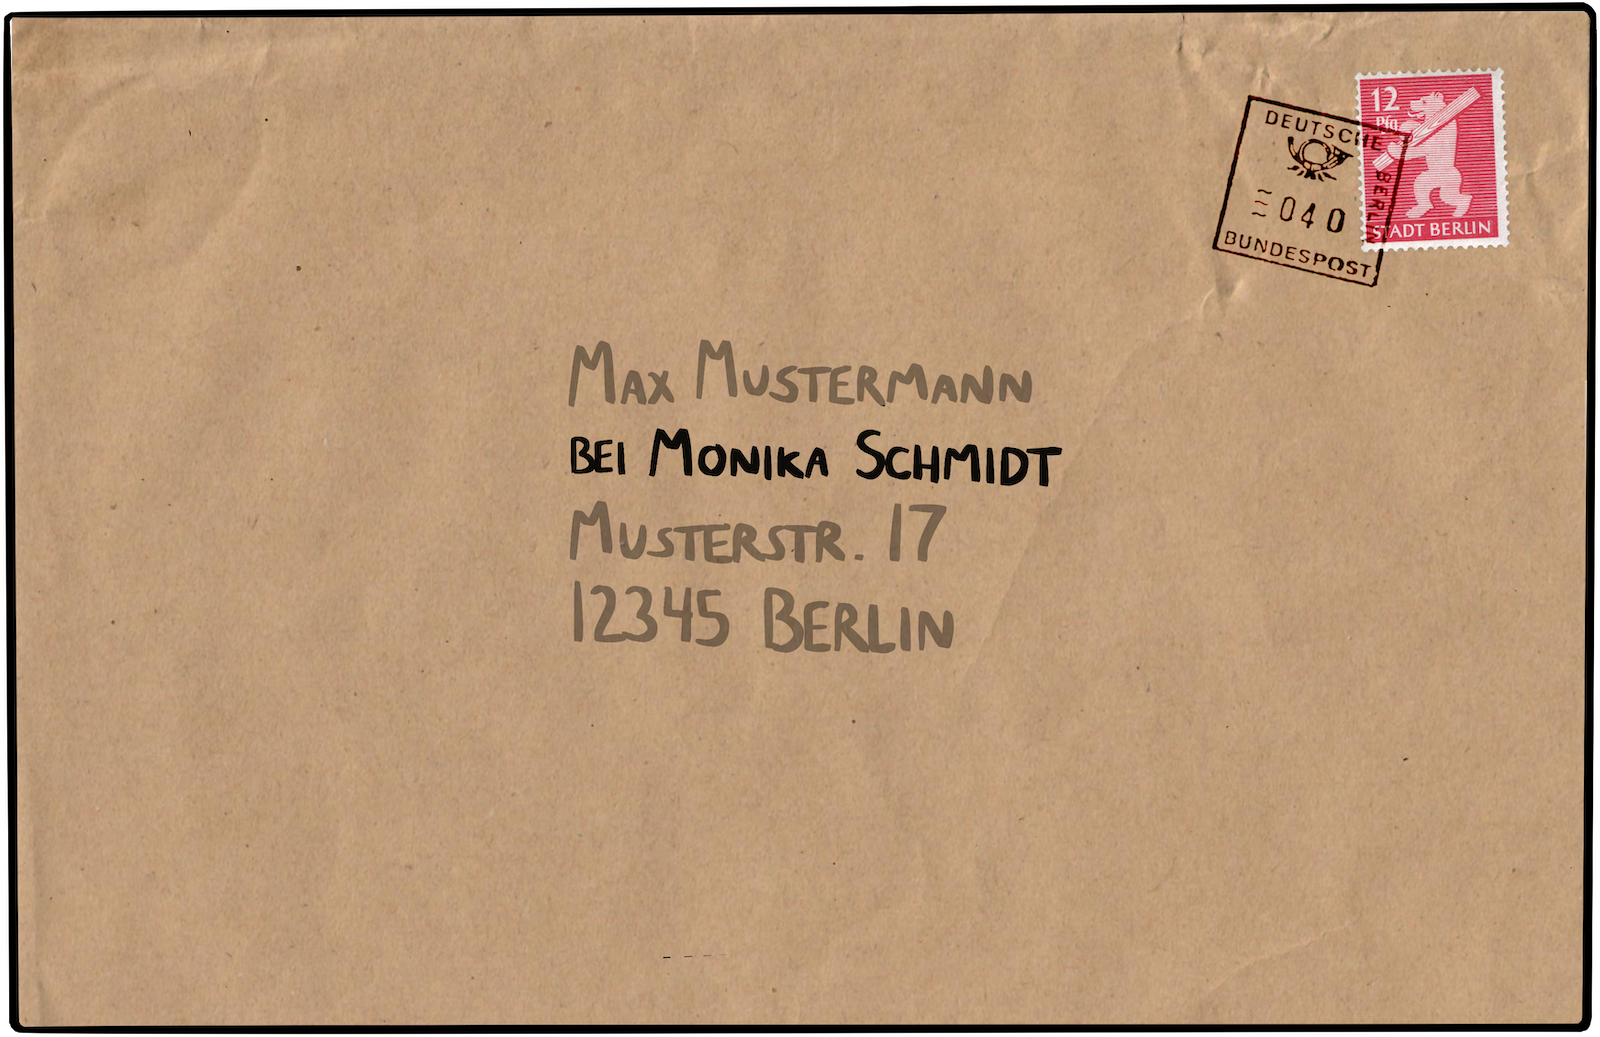 Envelope with German c/o address